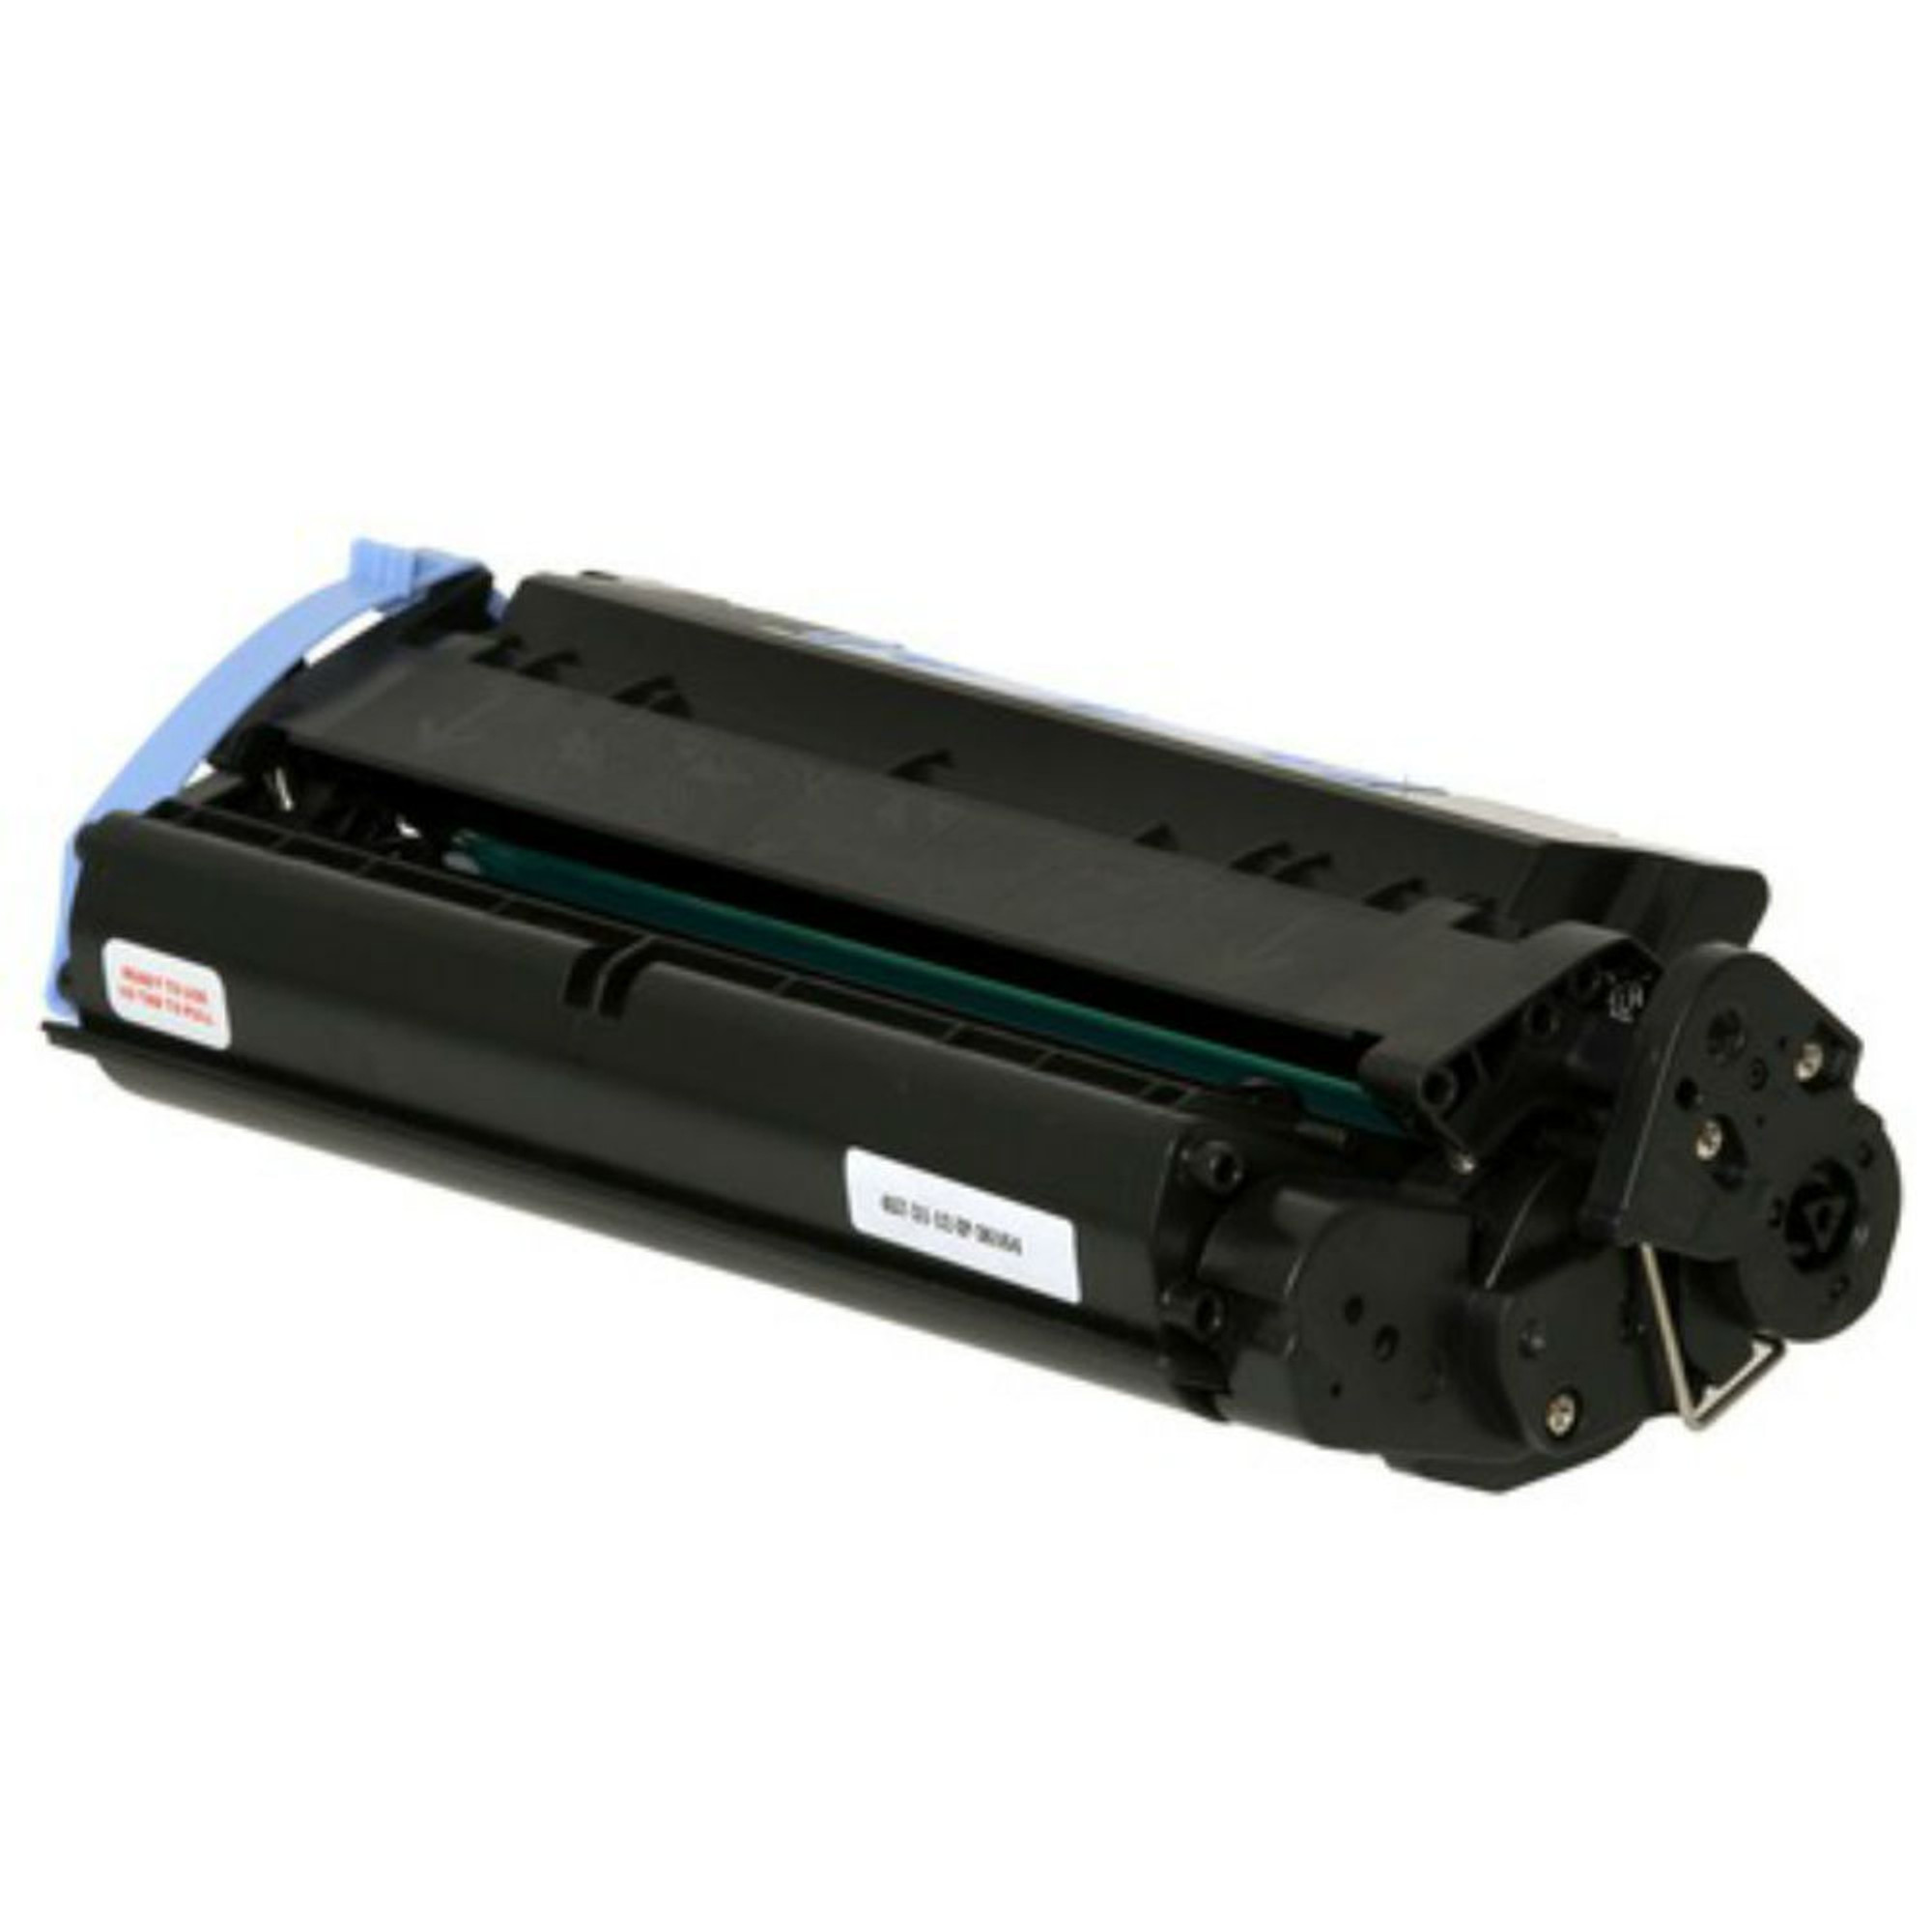 canon imageclass mf6530 printer